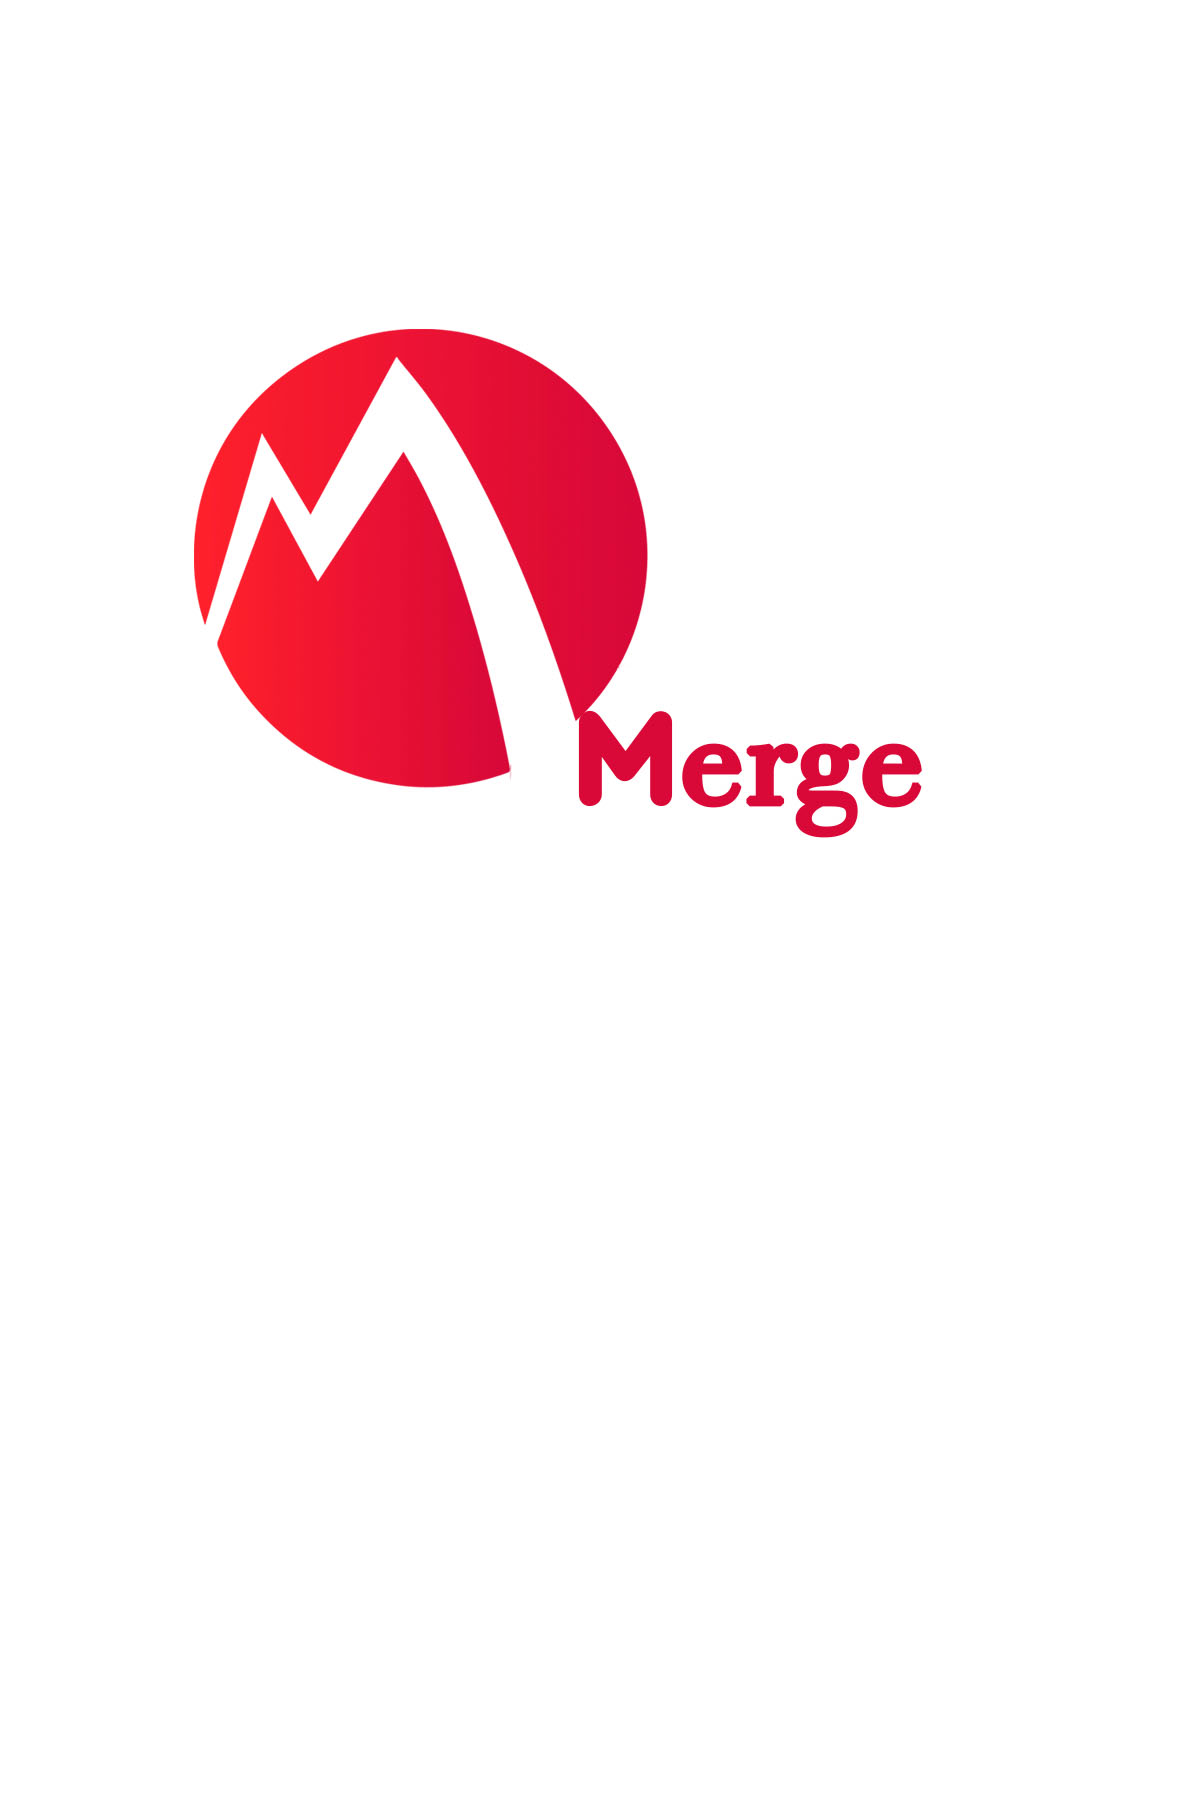 Merge Marketing Agency